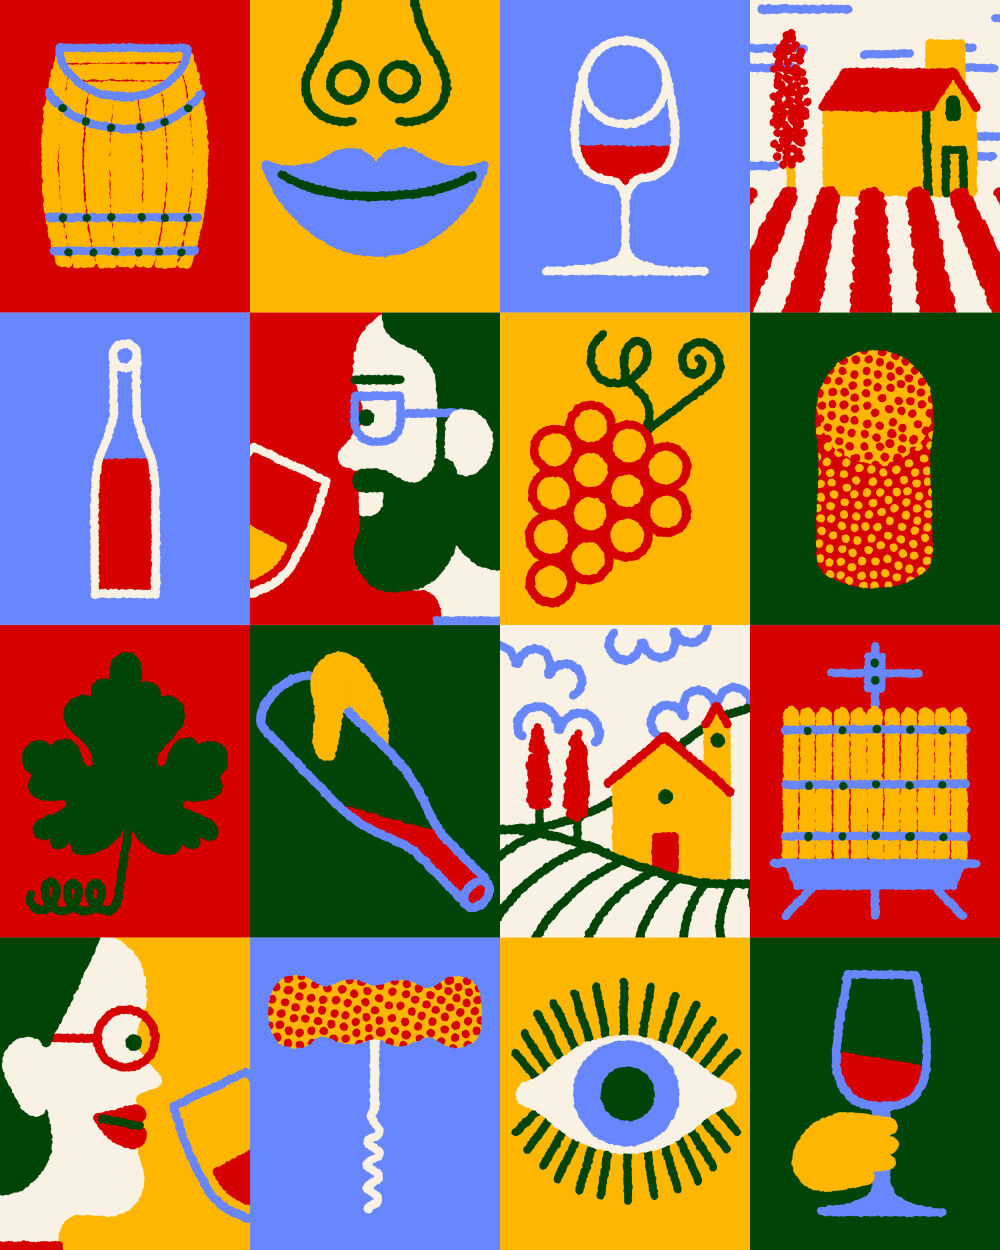 Illustrated pictograms, graphic icons by José Antonio Roda